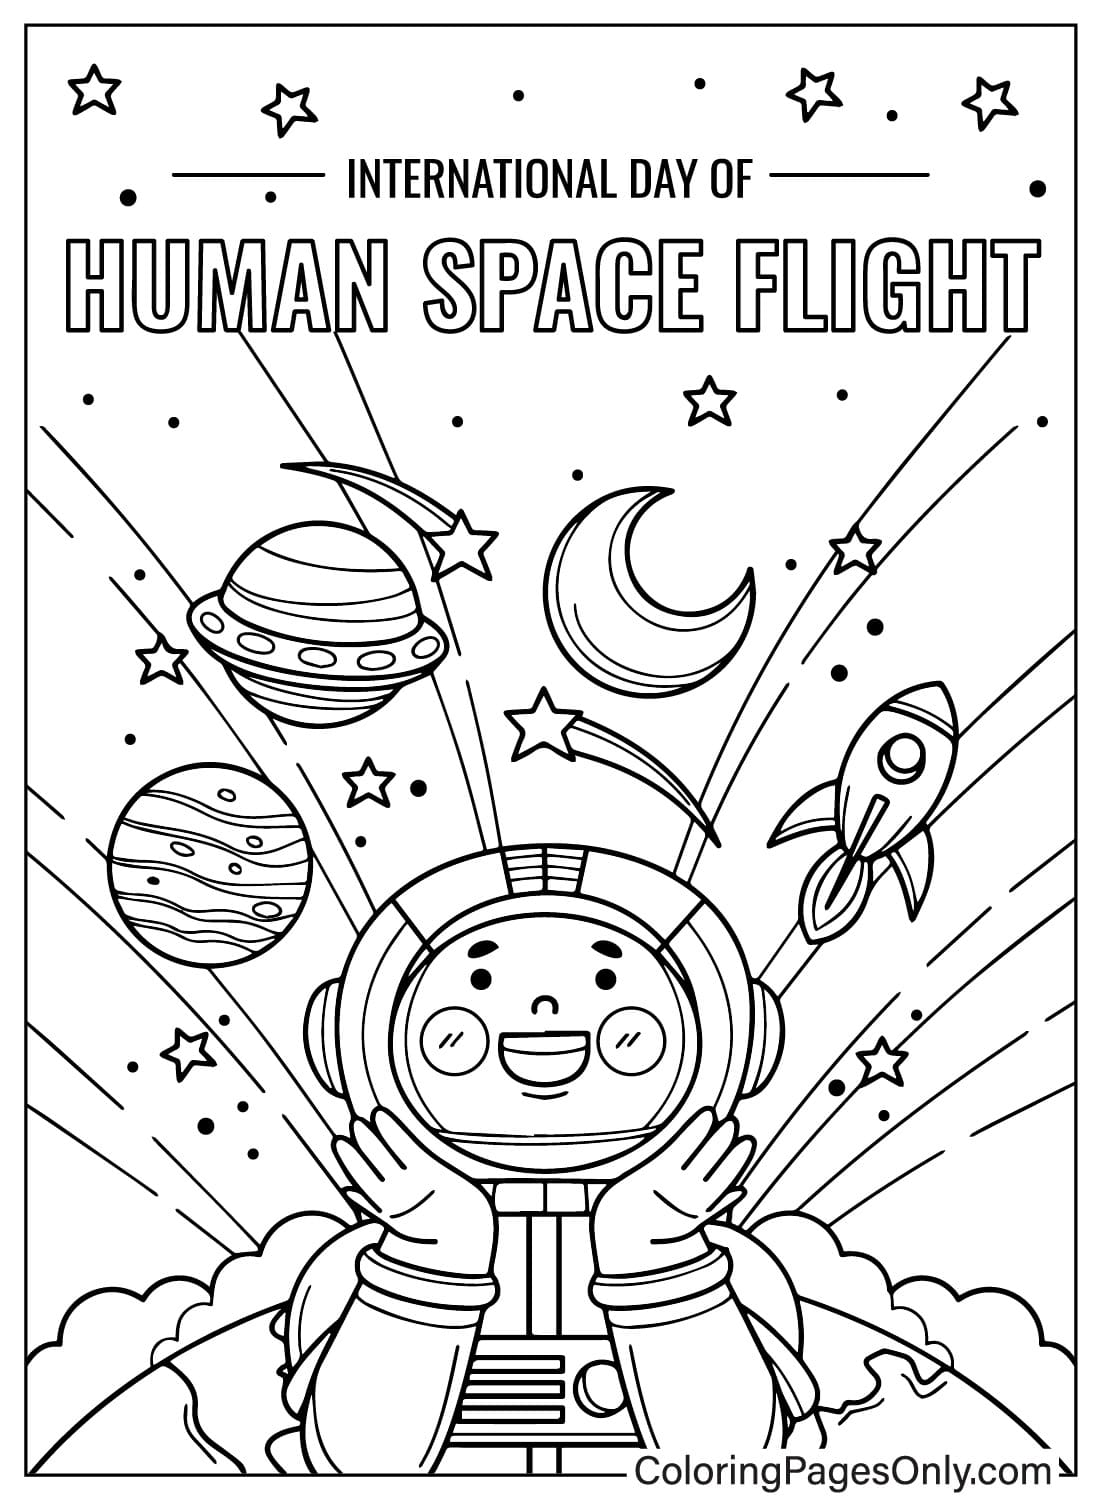 International Day of Human Space Flight Picture to Color from International Day of Human Space Flight